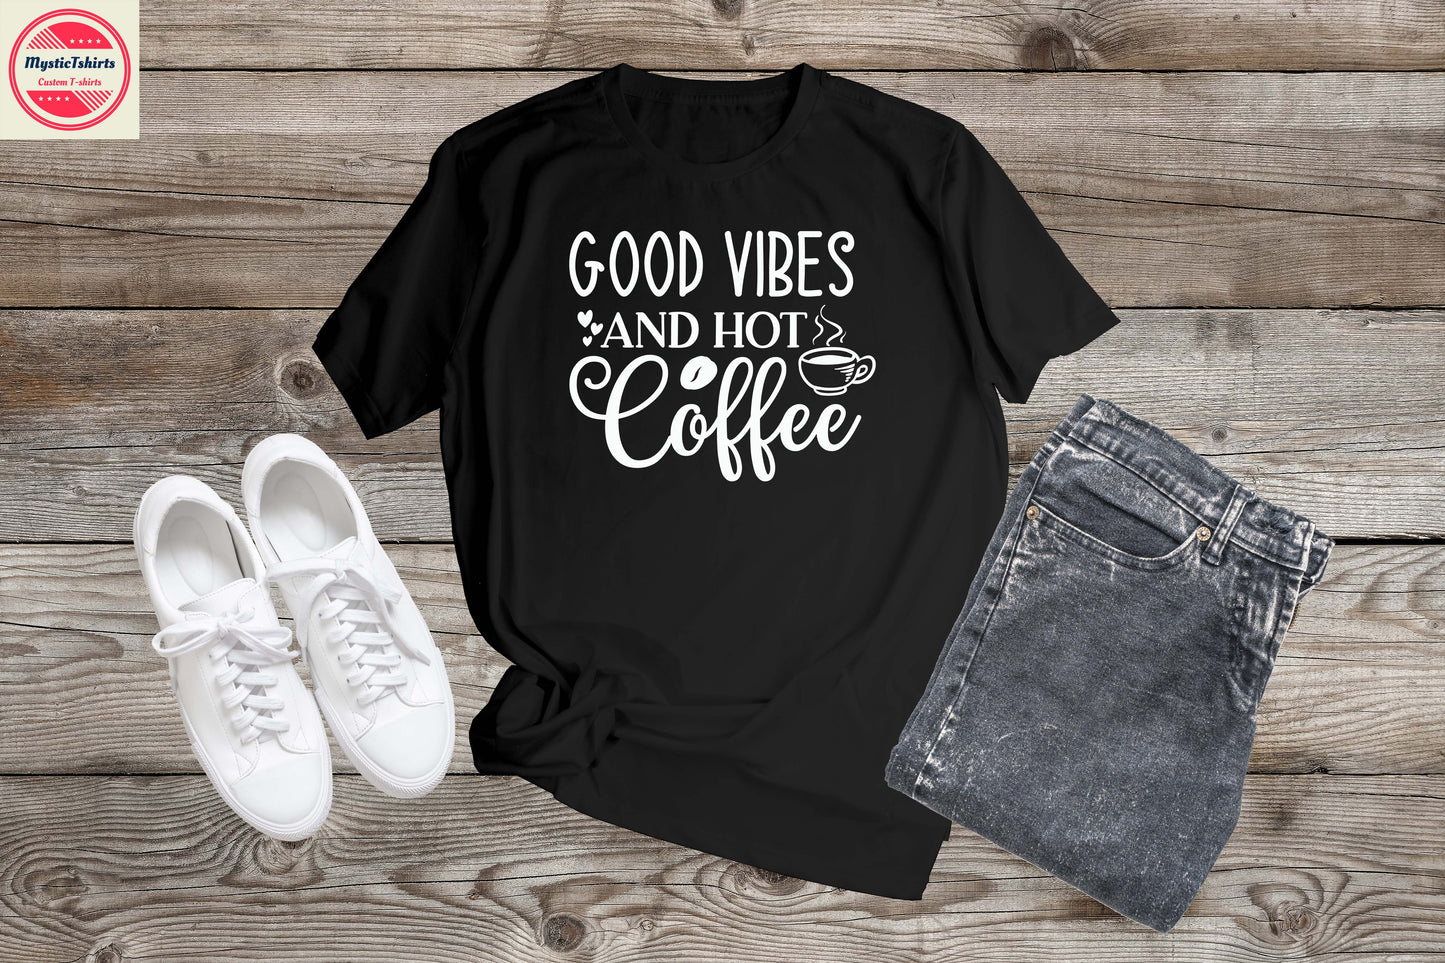 177. GOOD VIBES AND HOT COFFEE, Custom Made Shirt, Personalized T-Shirt, Custom Text, Make Your Own Shirt, Custom Tee